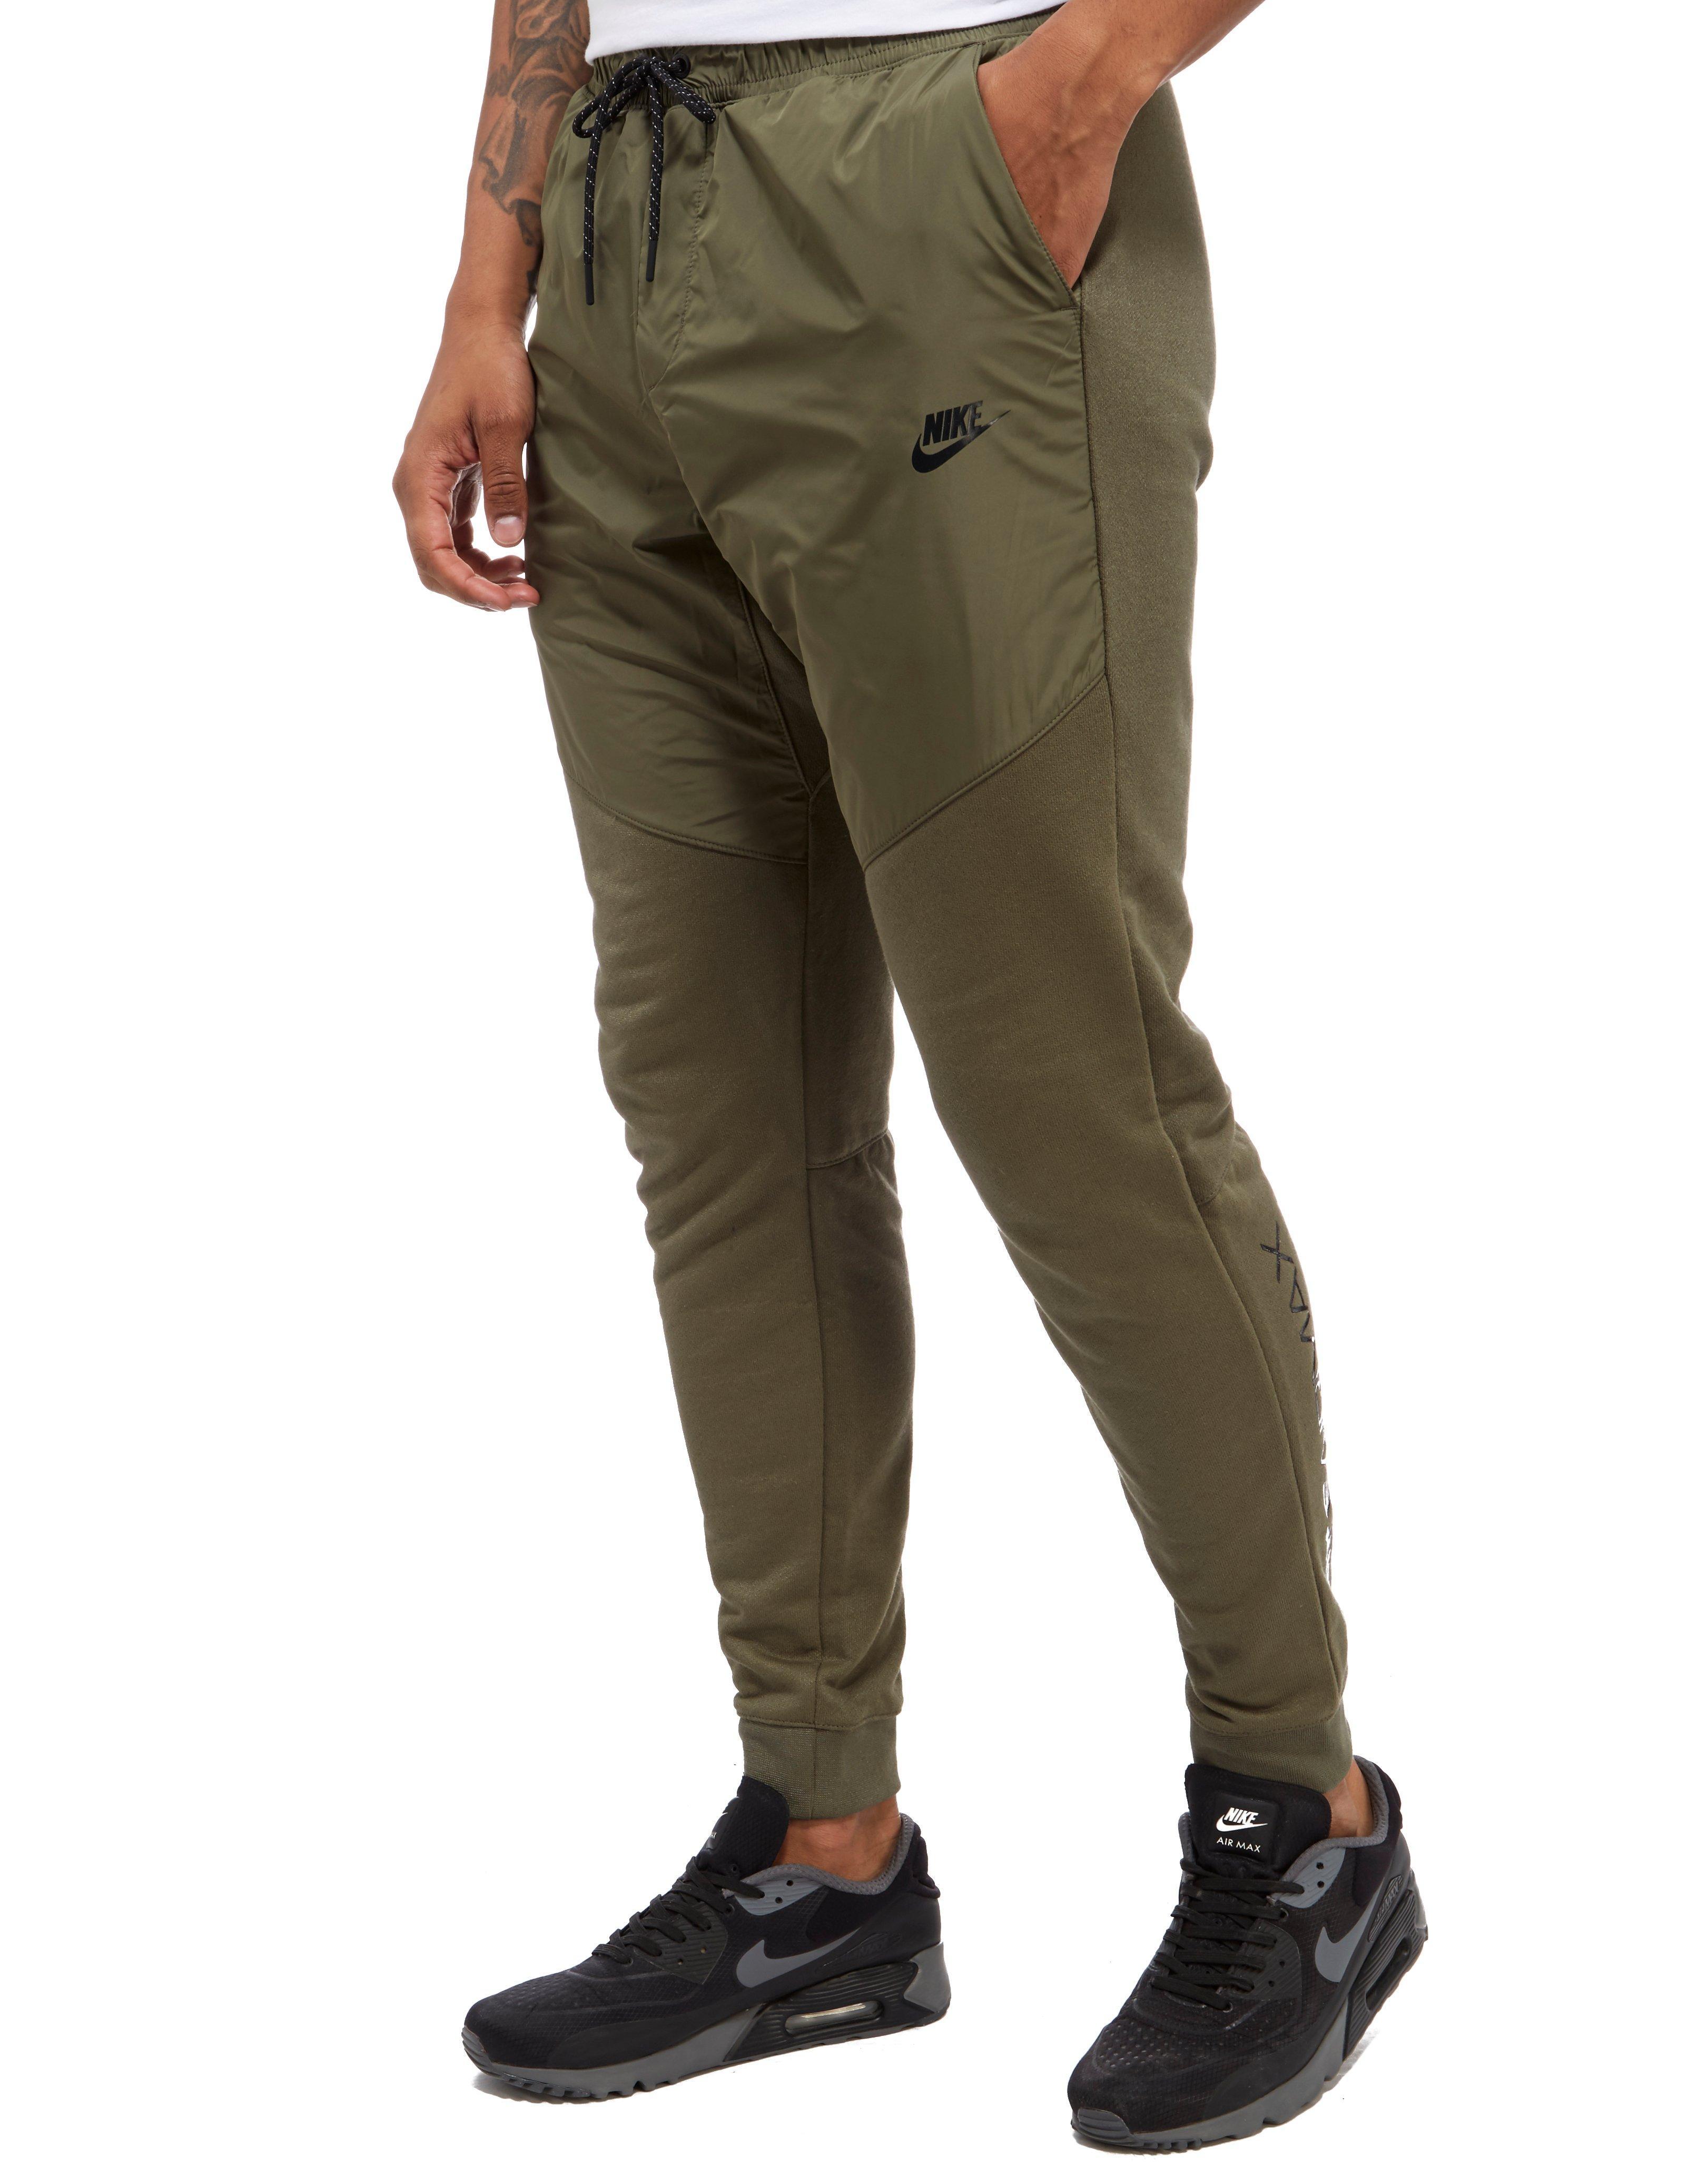 Lyst - Nike Air Max Pants in Green for Men